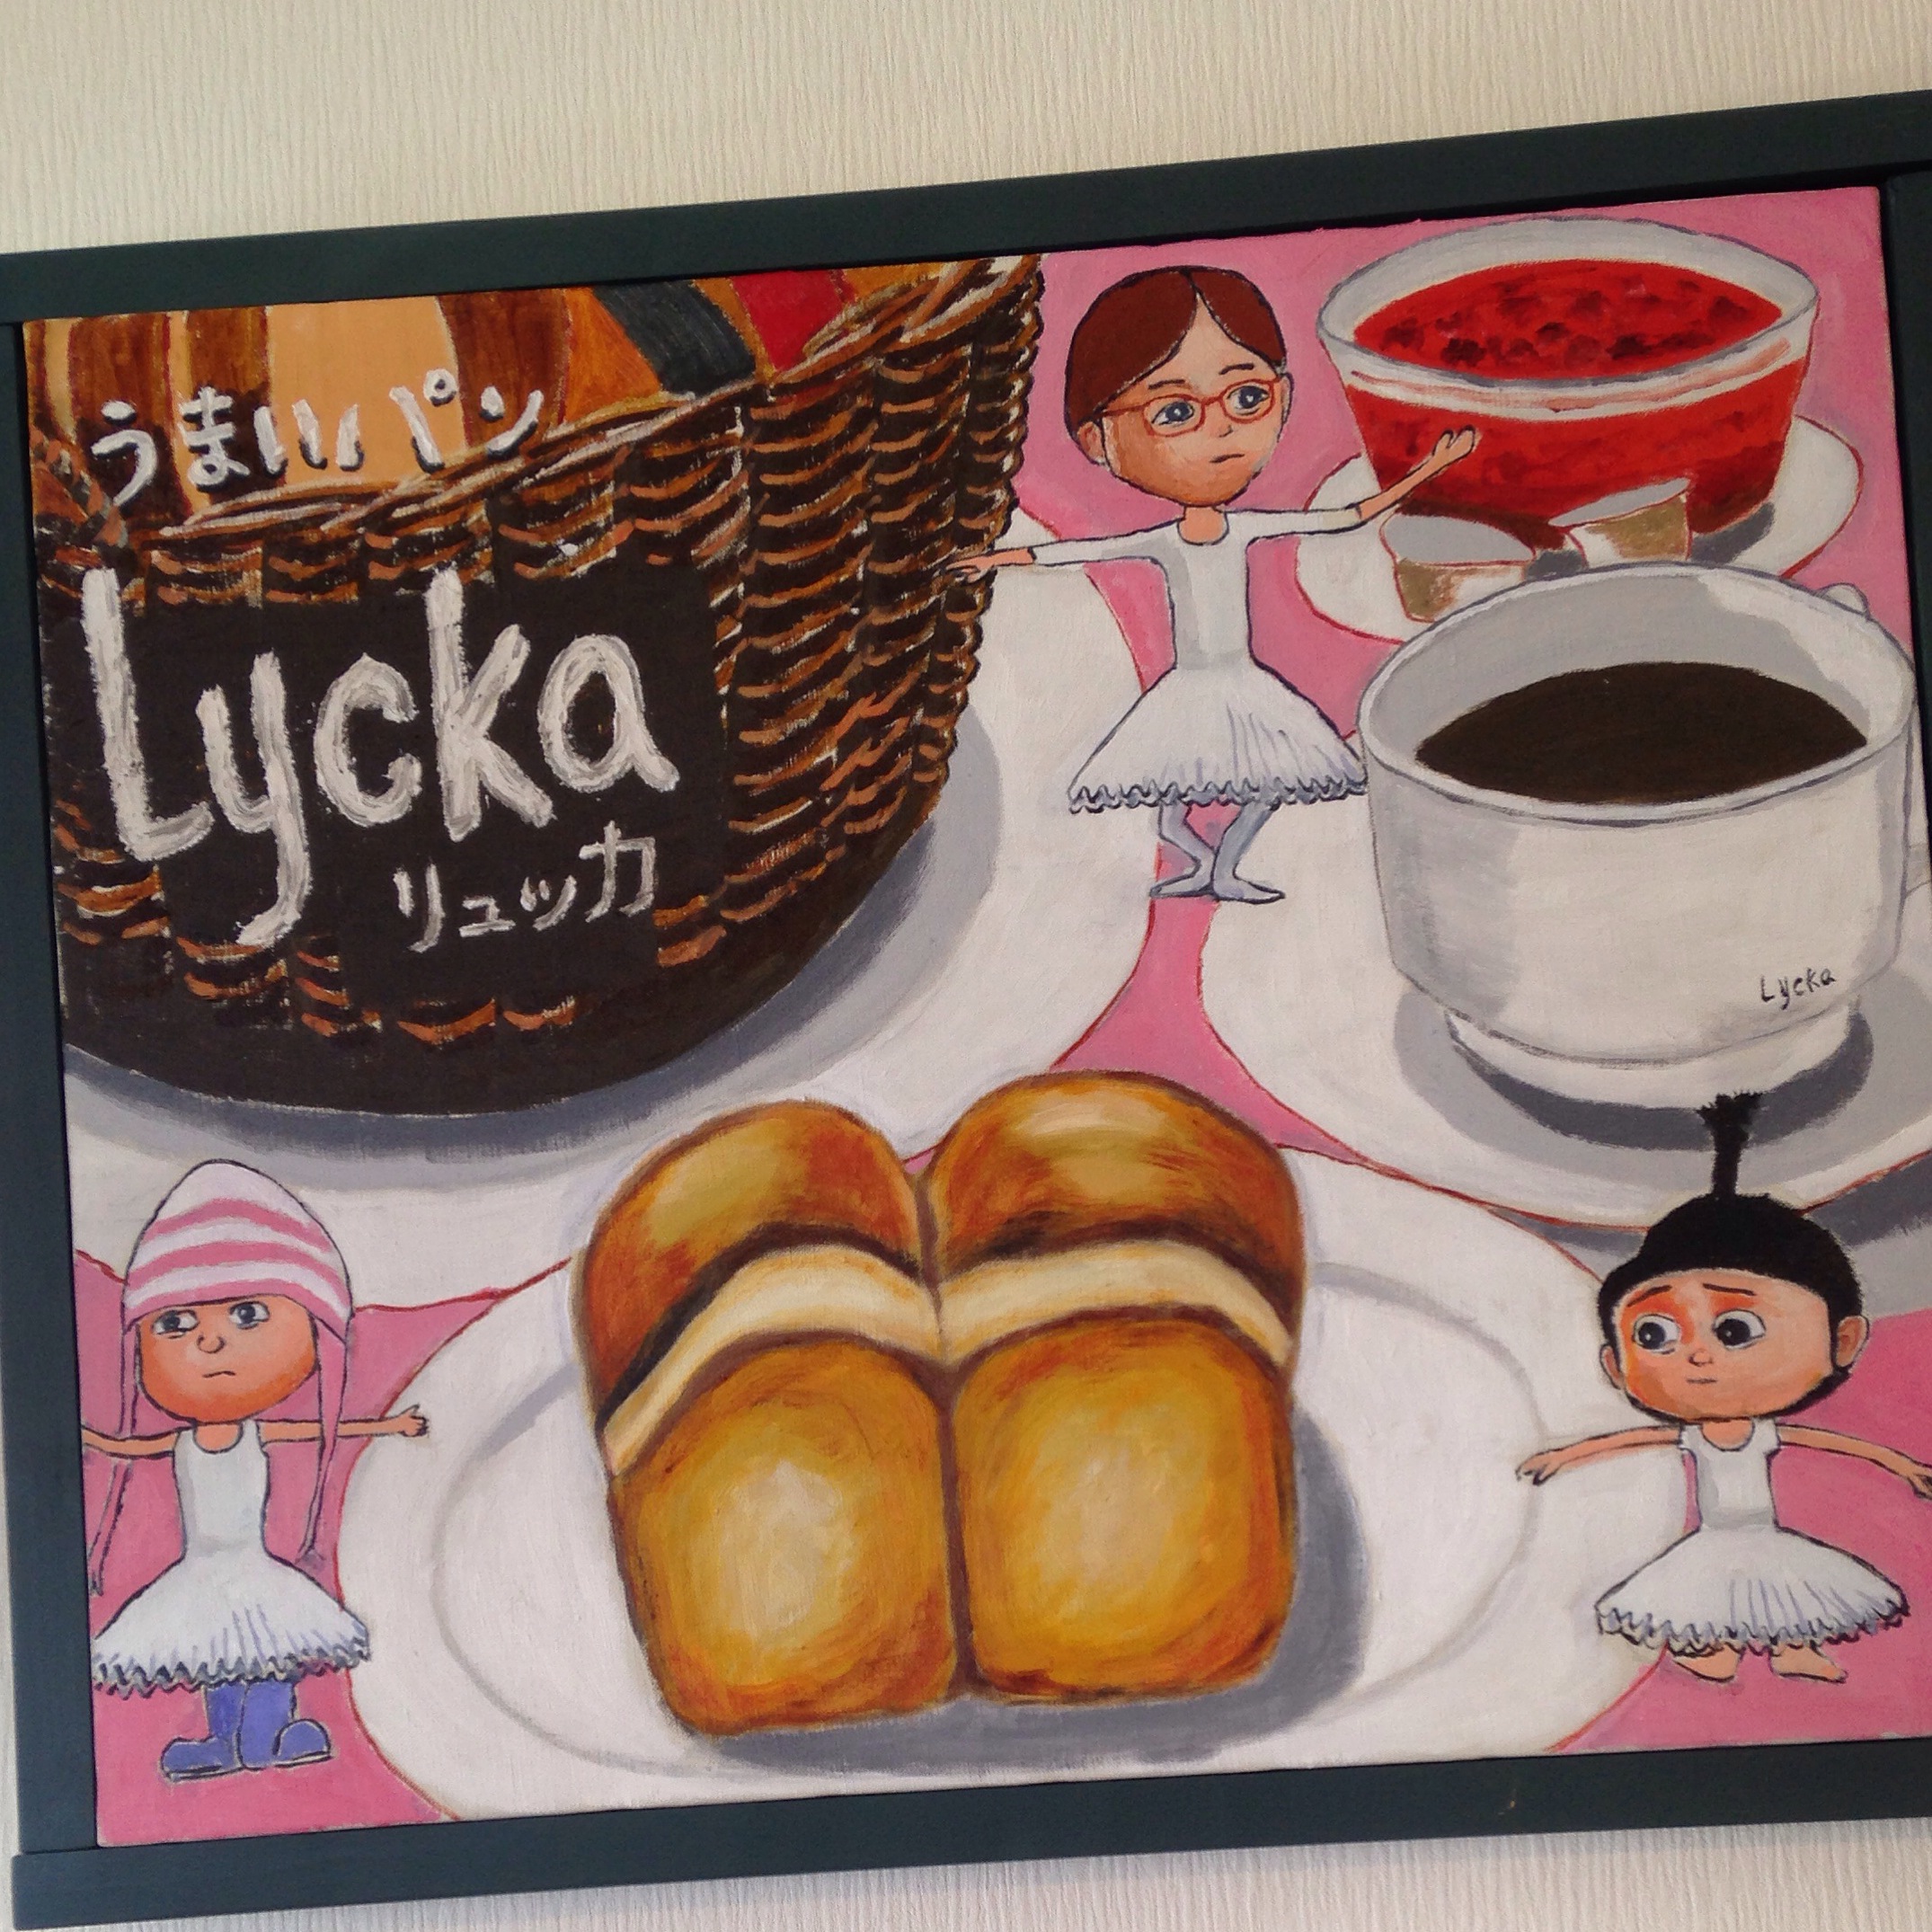 Lycka(リュッカ)のパンの特徴